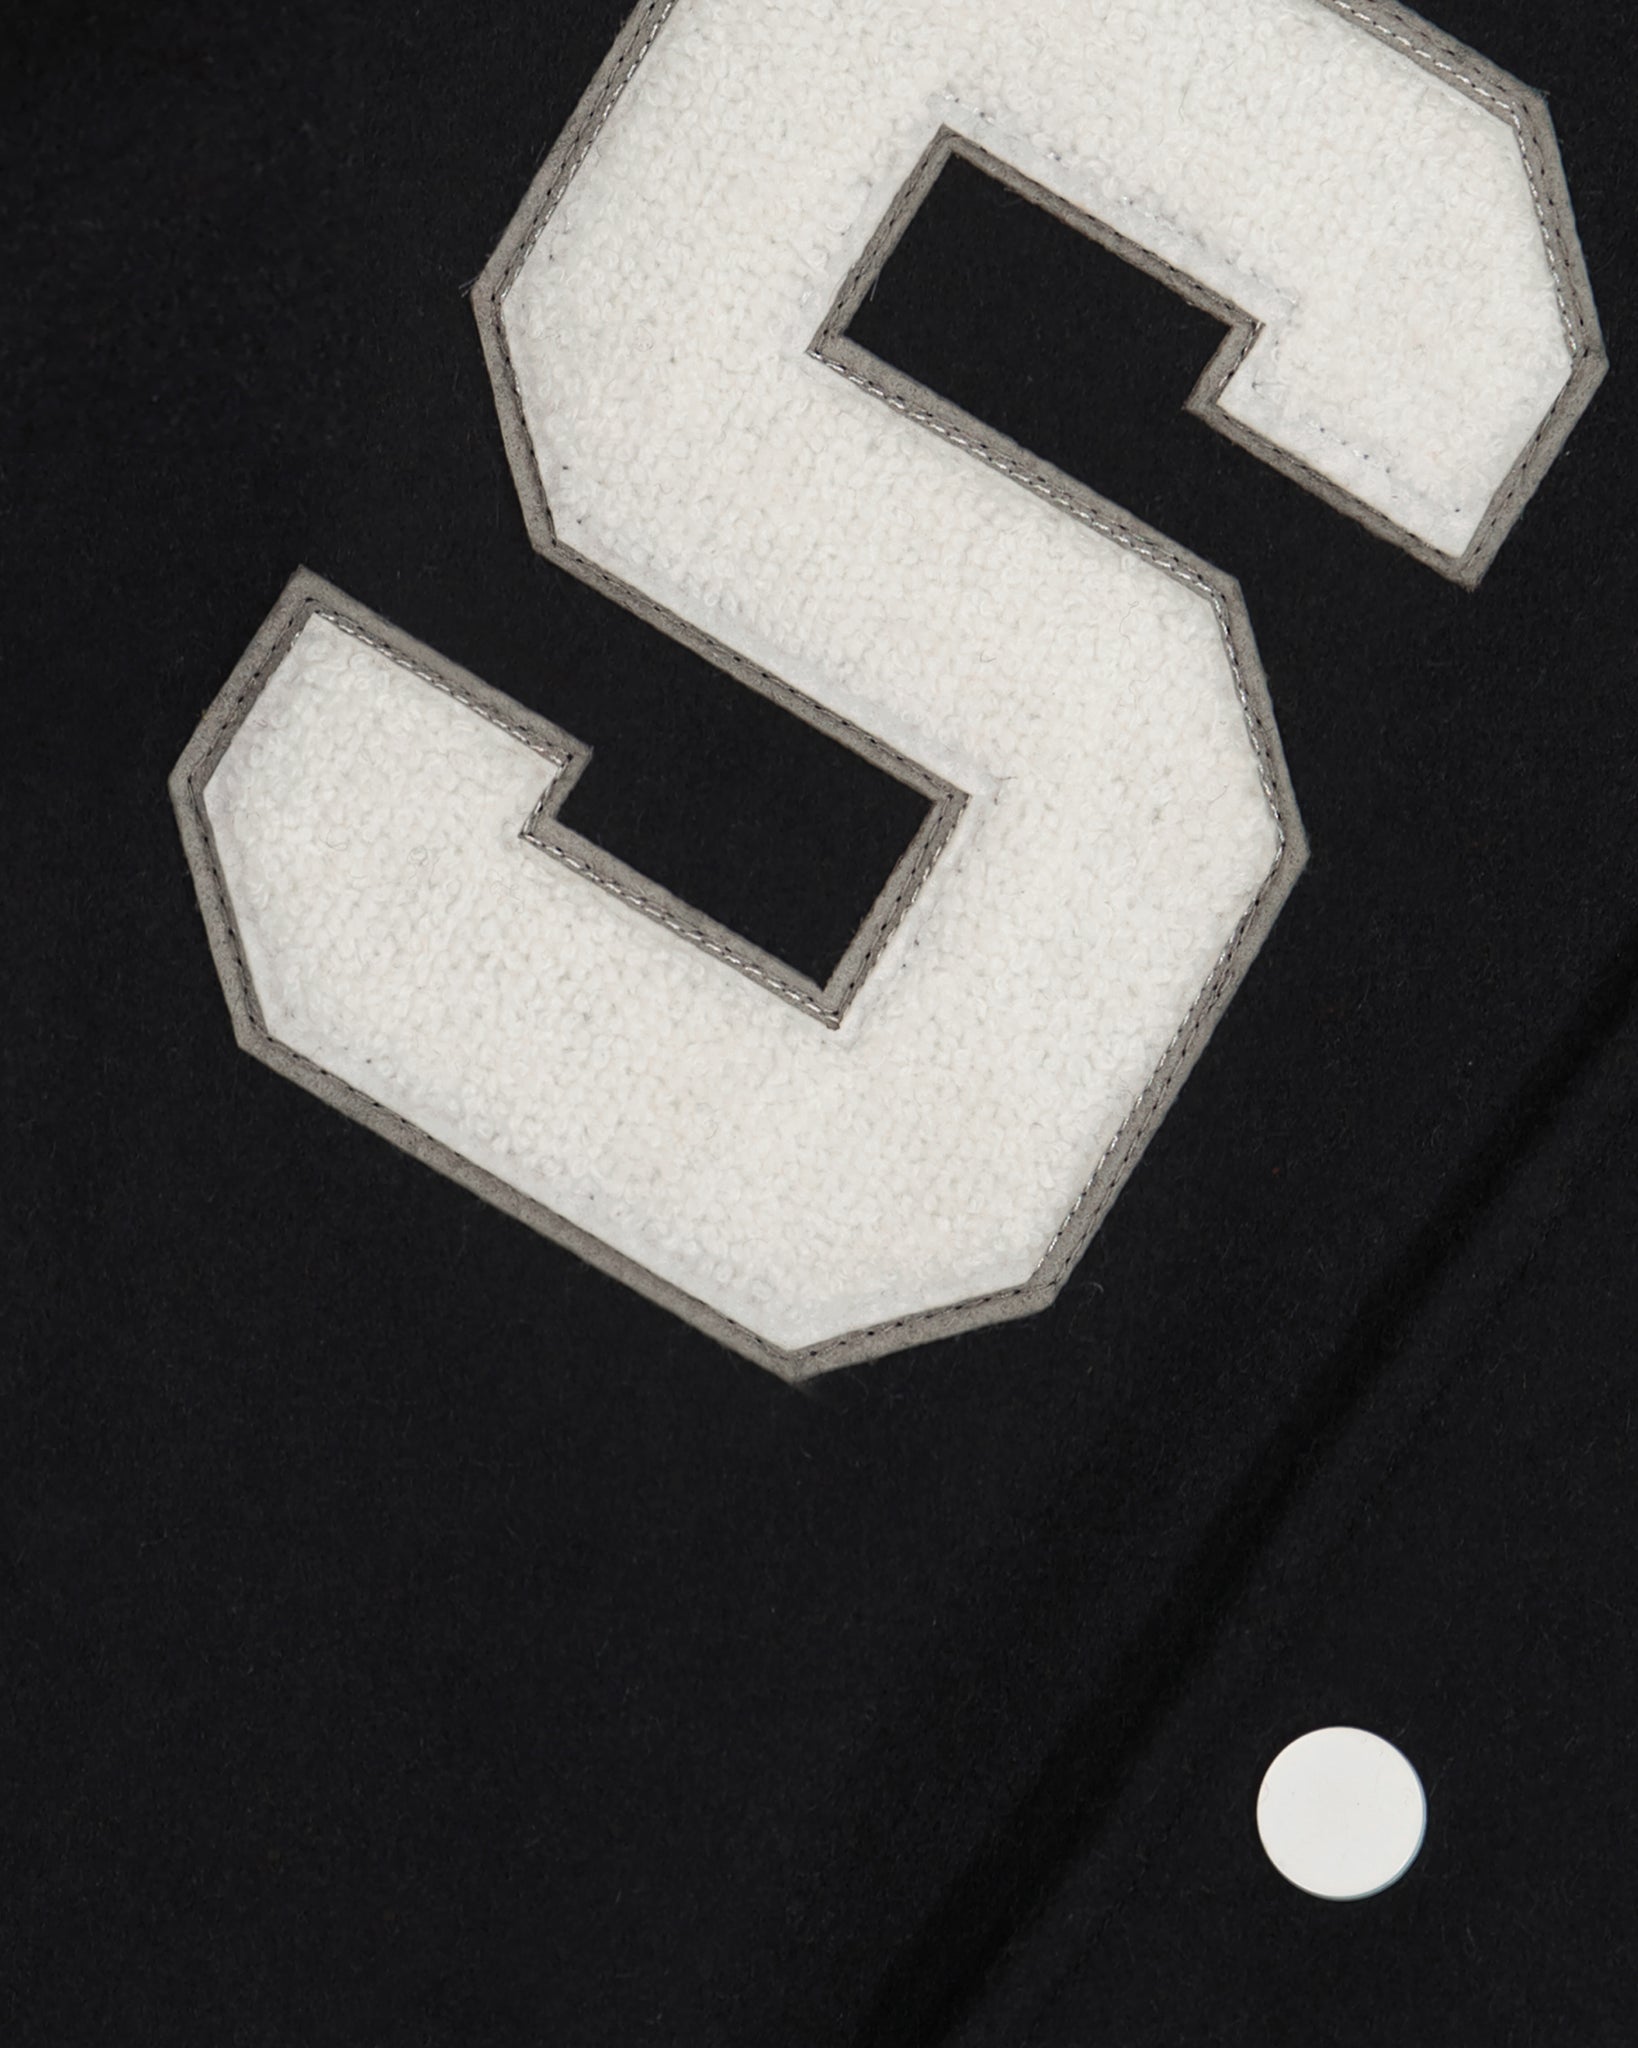 Southern Gent Varsity Jacket - Black + White